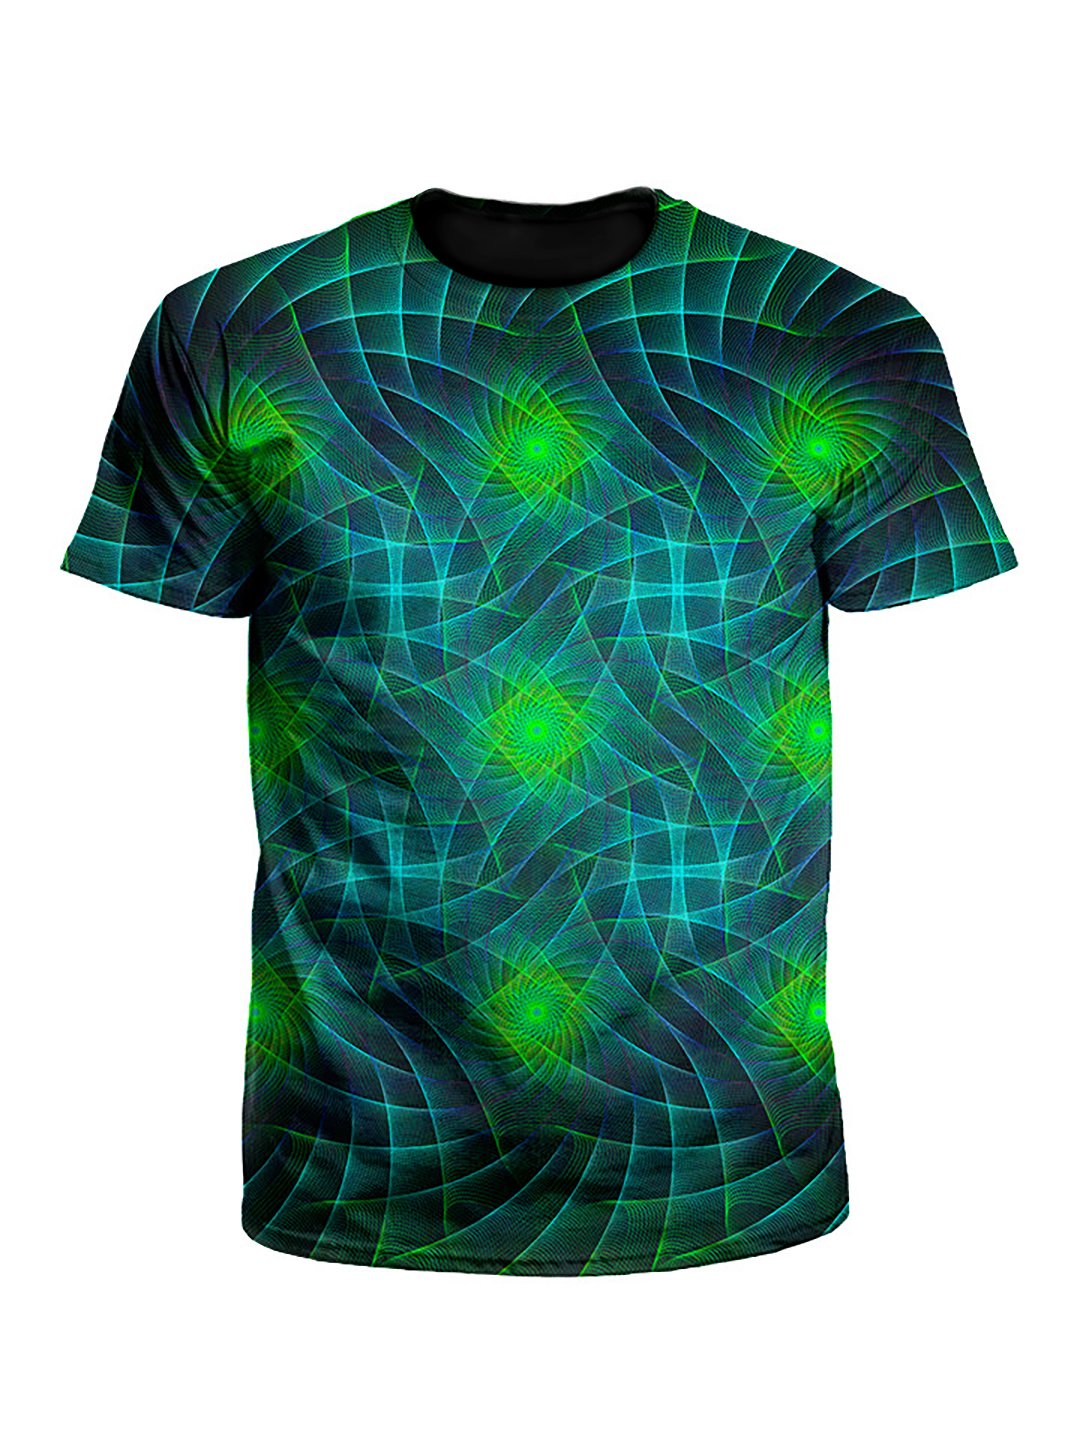 Motherboard Geometric Fractal Unisex T-Shirt - Boogie Threads